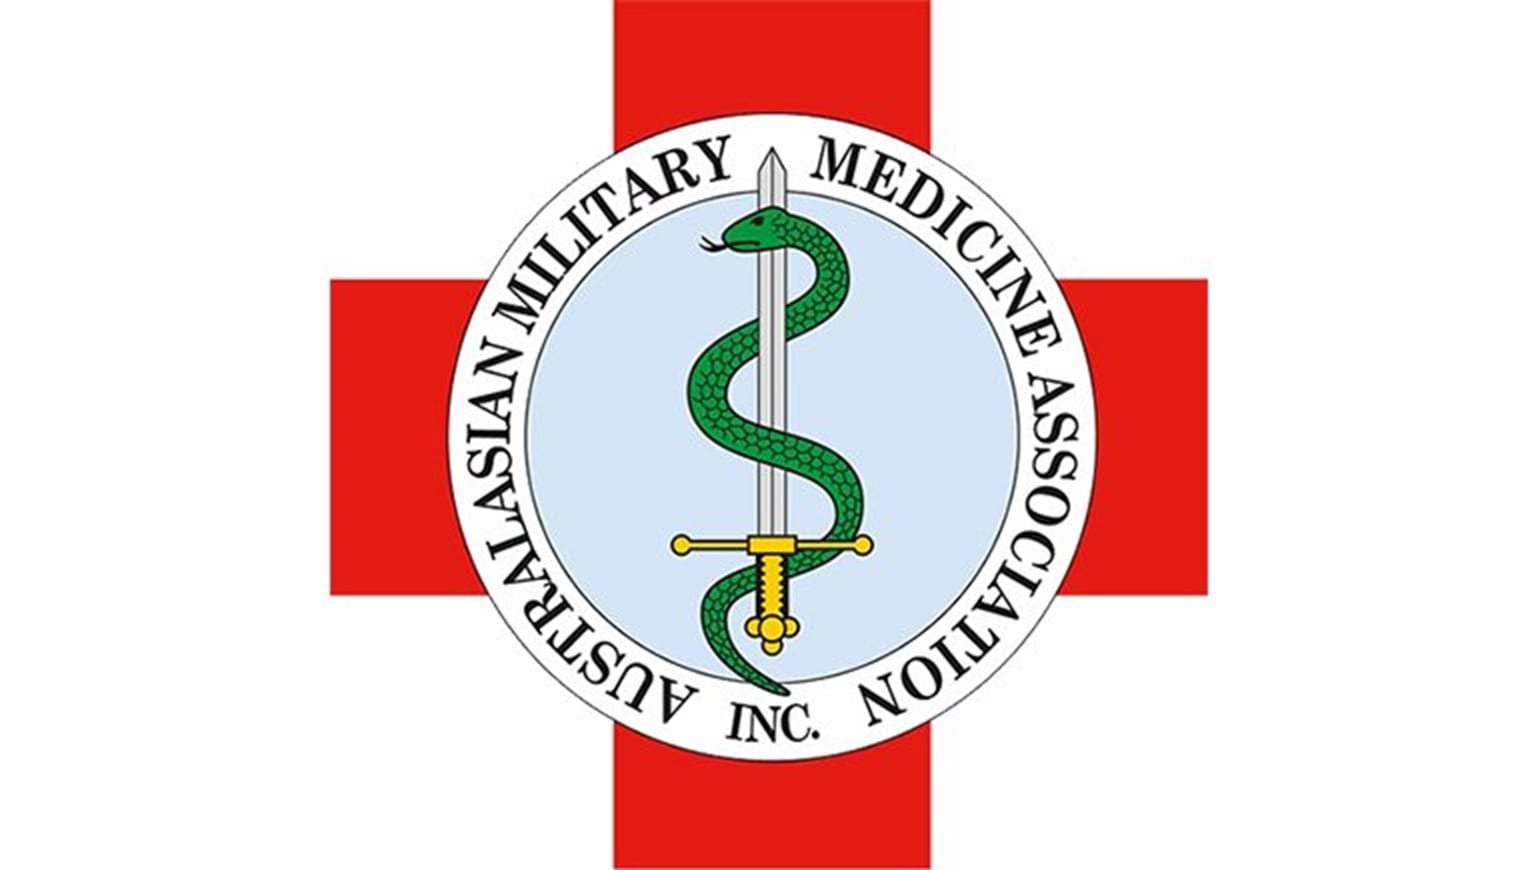 AMMA 2019 - Australasian Military Medicine Association Conference